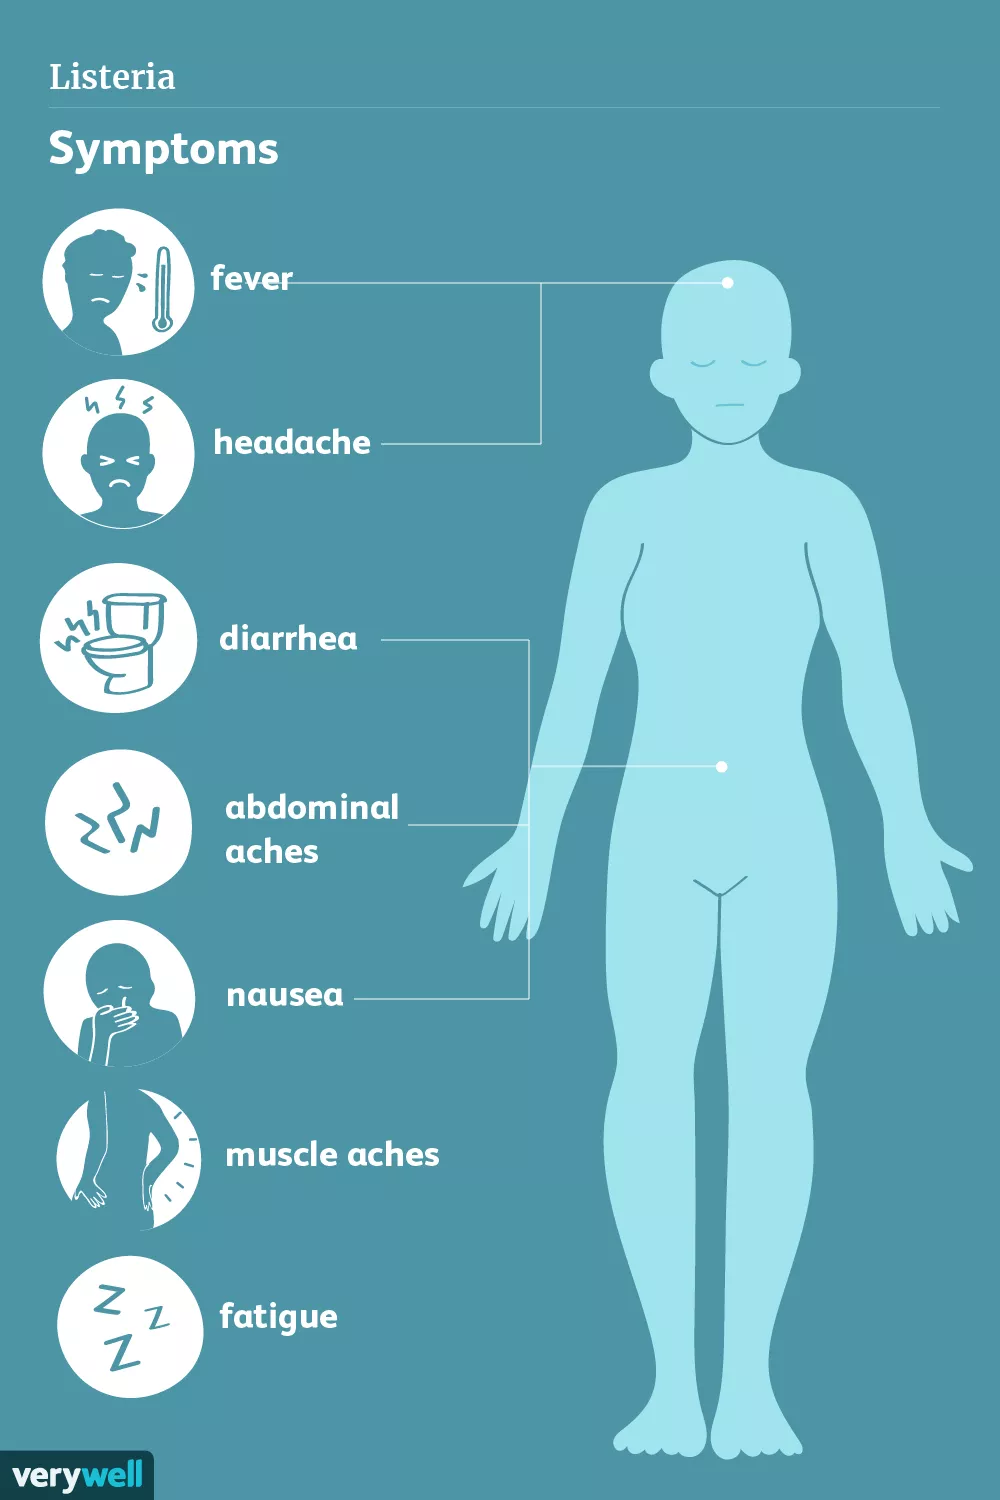 Ramai Bahaya Penyakit dari Jamur Enoki, Ini 5 Fakta Infeksi Listeria